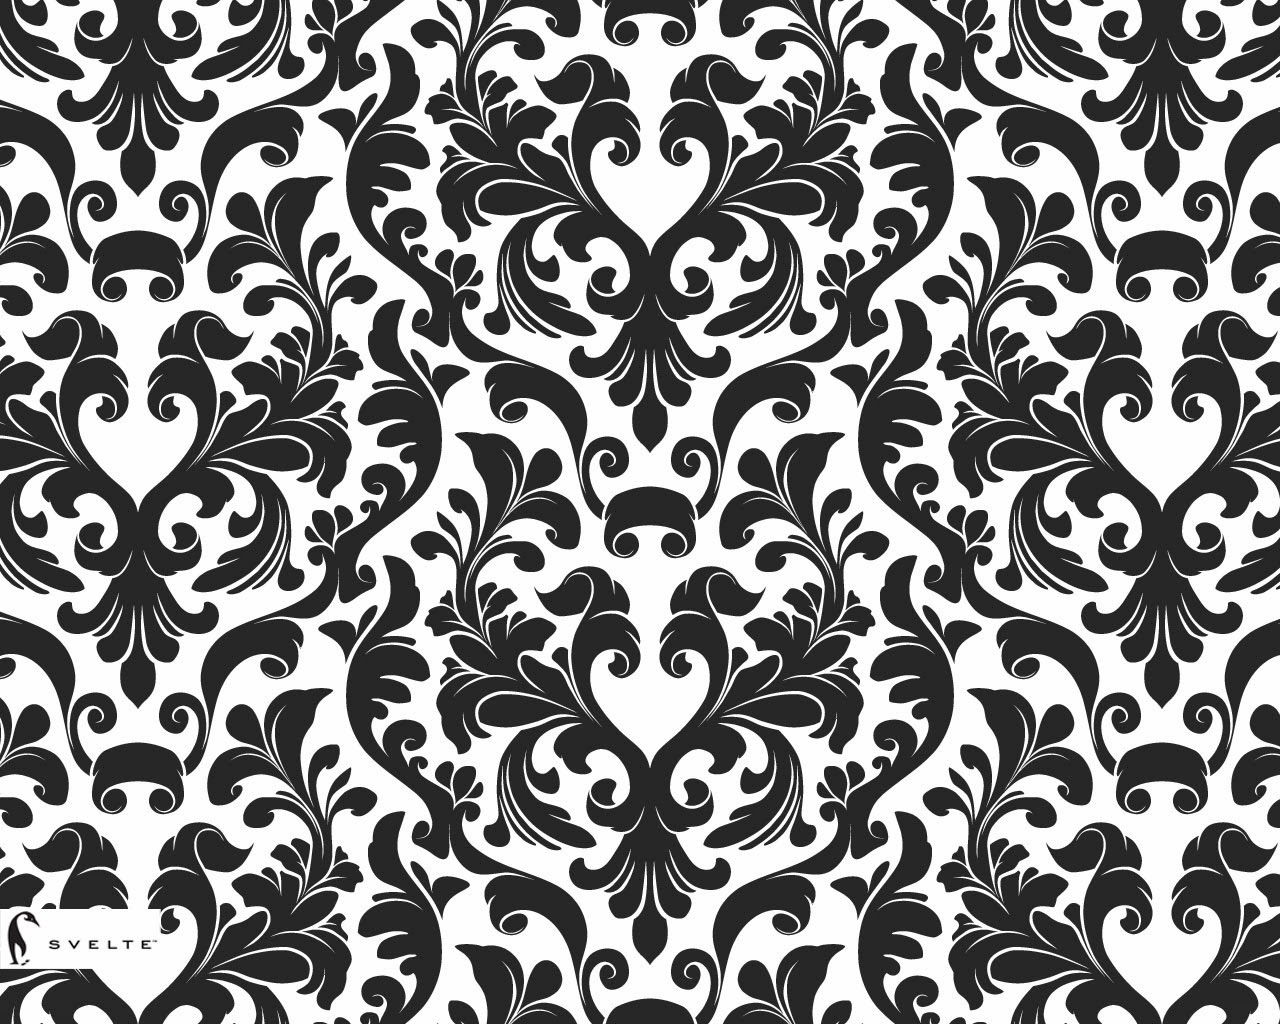 47+] Black and White Pattern Wallpaper - WallpaperSafari